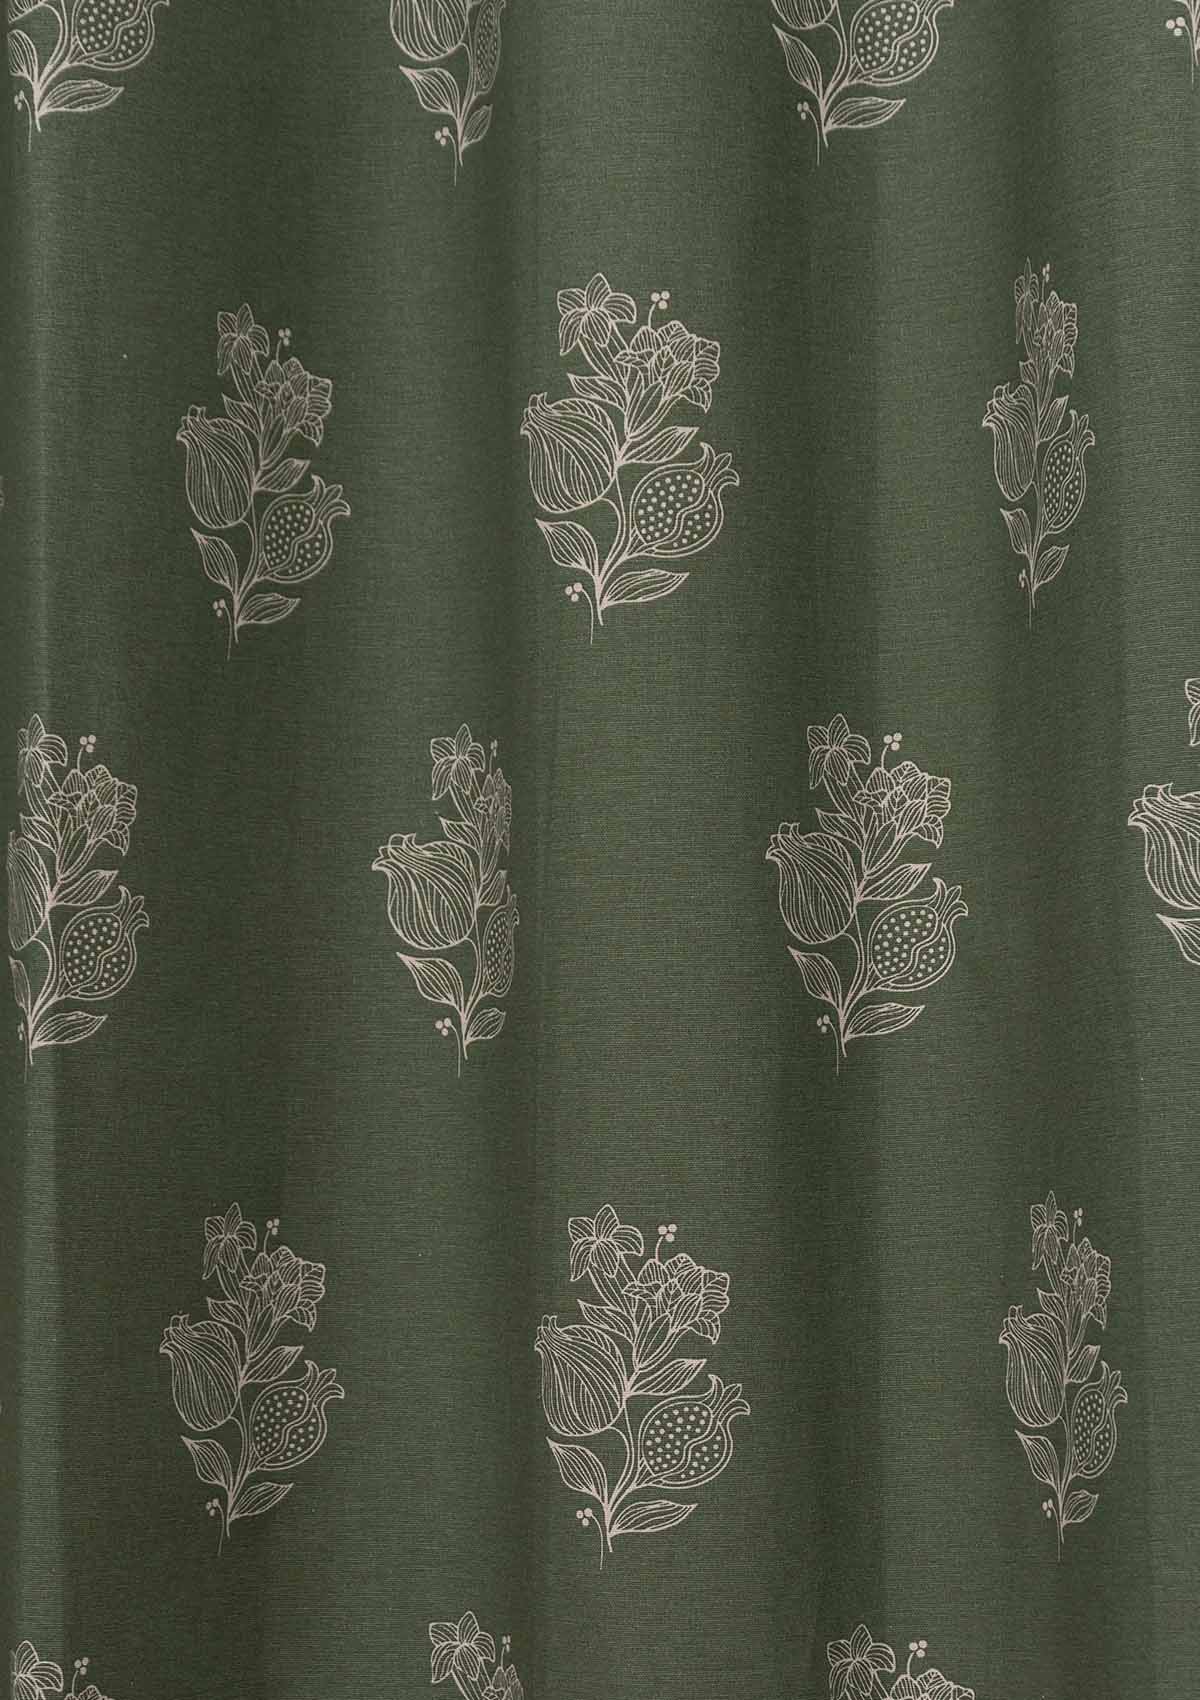 Malabar Printed 100% Customizable Cotton ethnic curtain for living room & Bedroom - Room darkening - Pepper Green